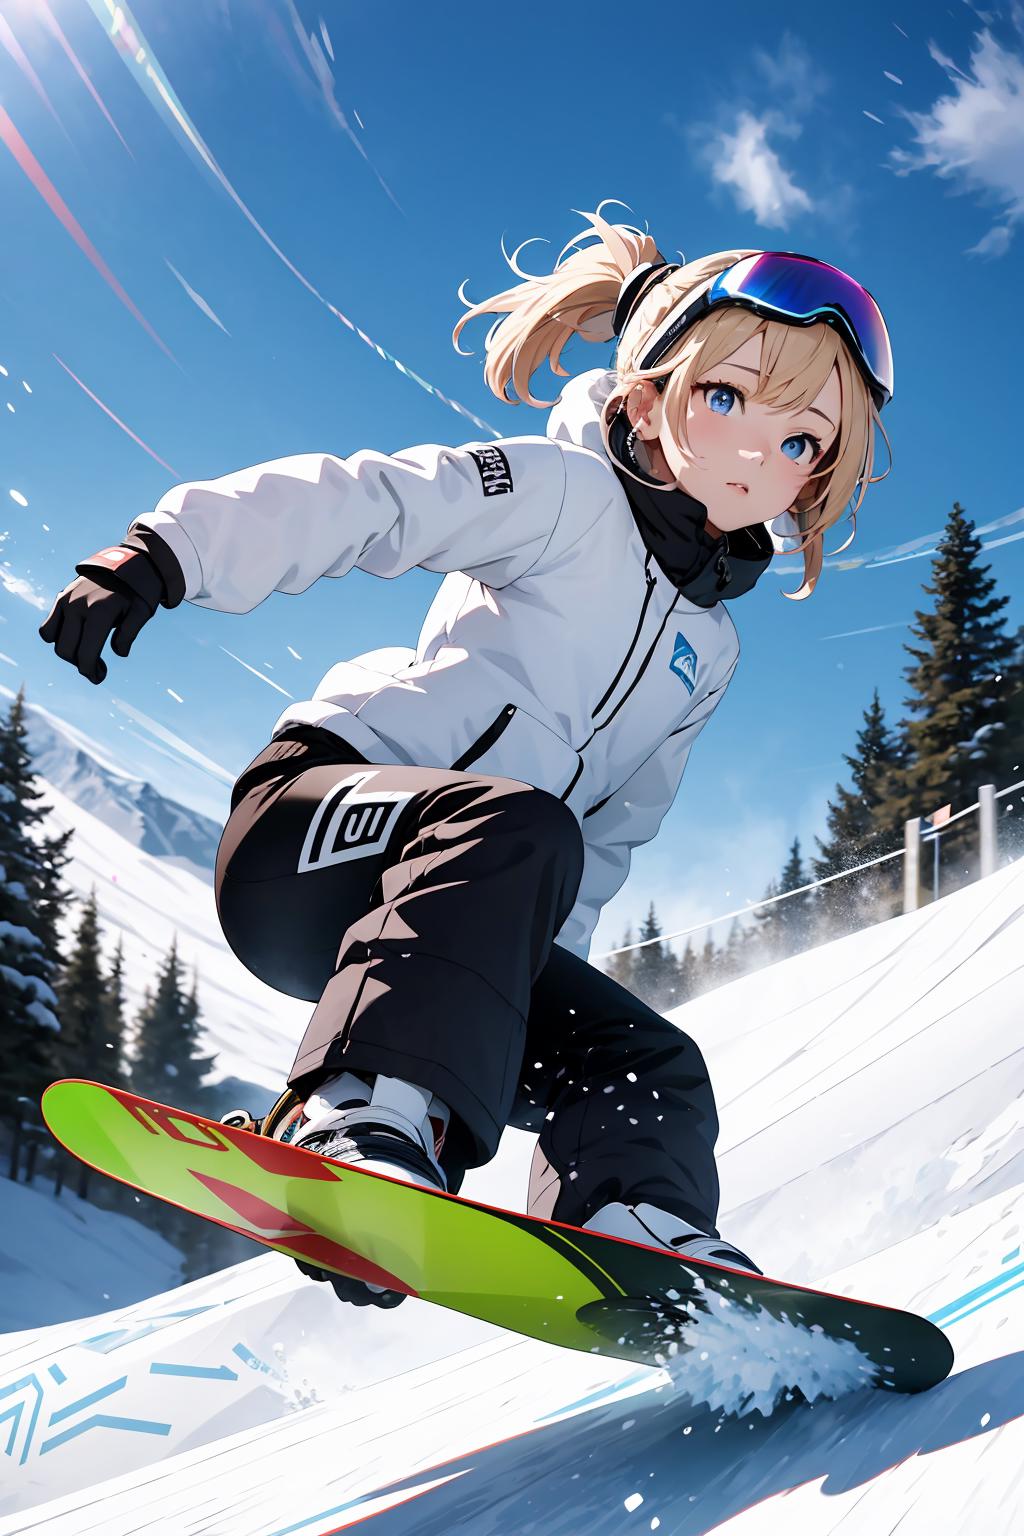 Snowboard | page 2 of 8 - Zerochan Anime Image Board-demhanvico.com.vn